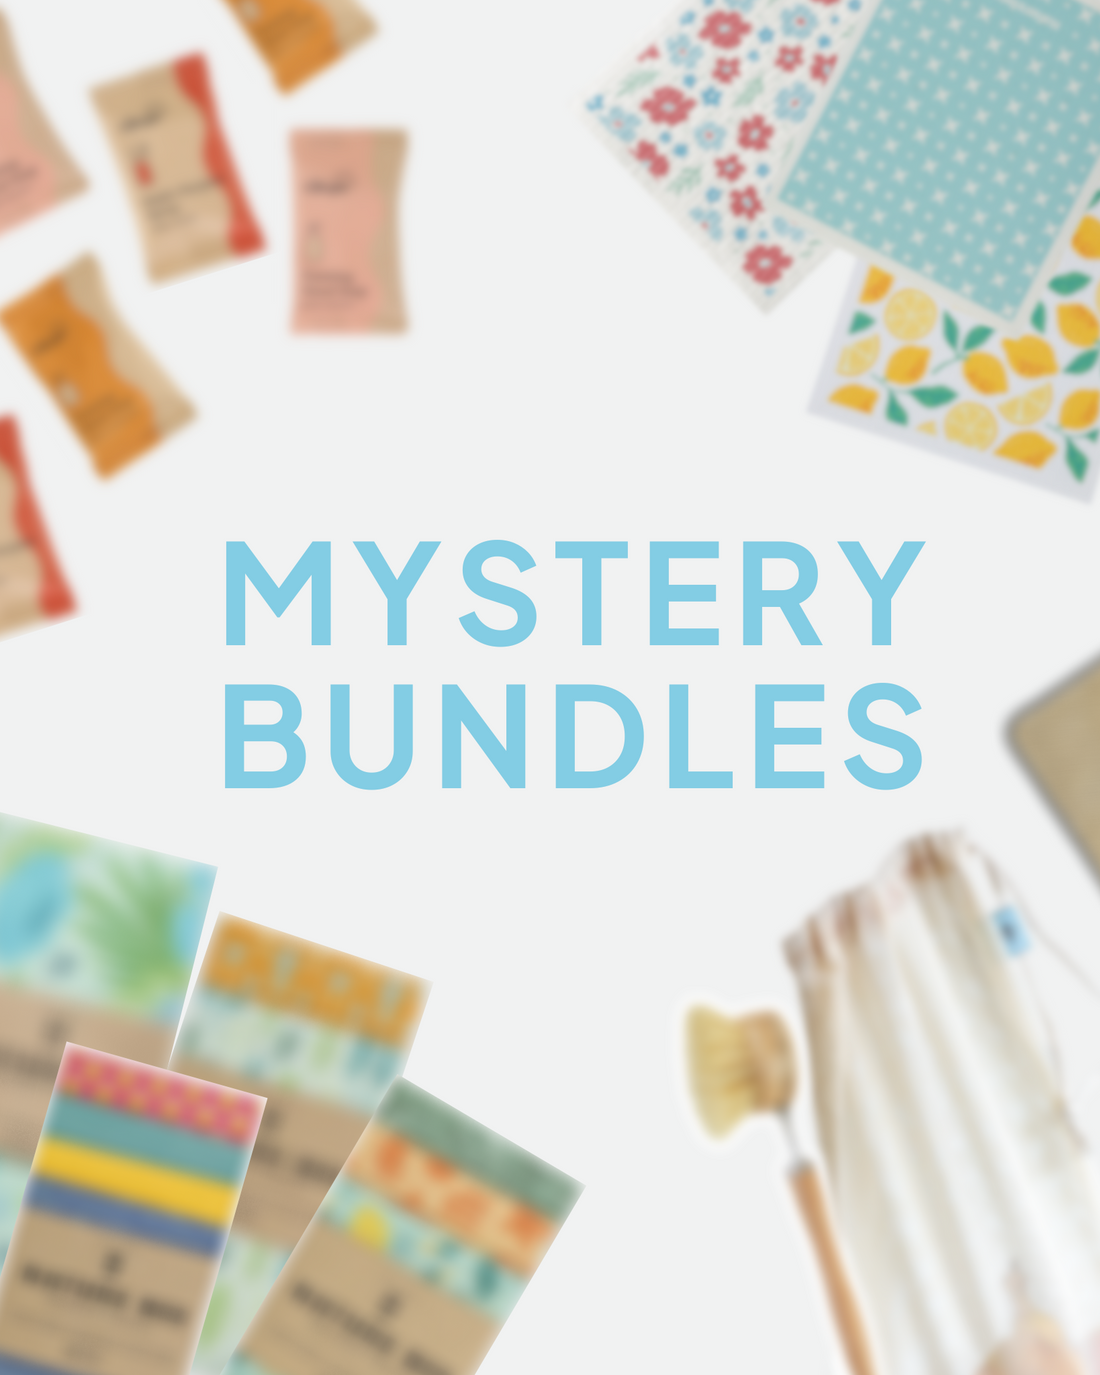 Mystery Bundles - Warehouse Blowout Sale!